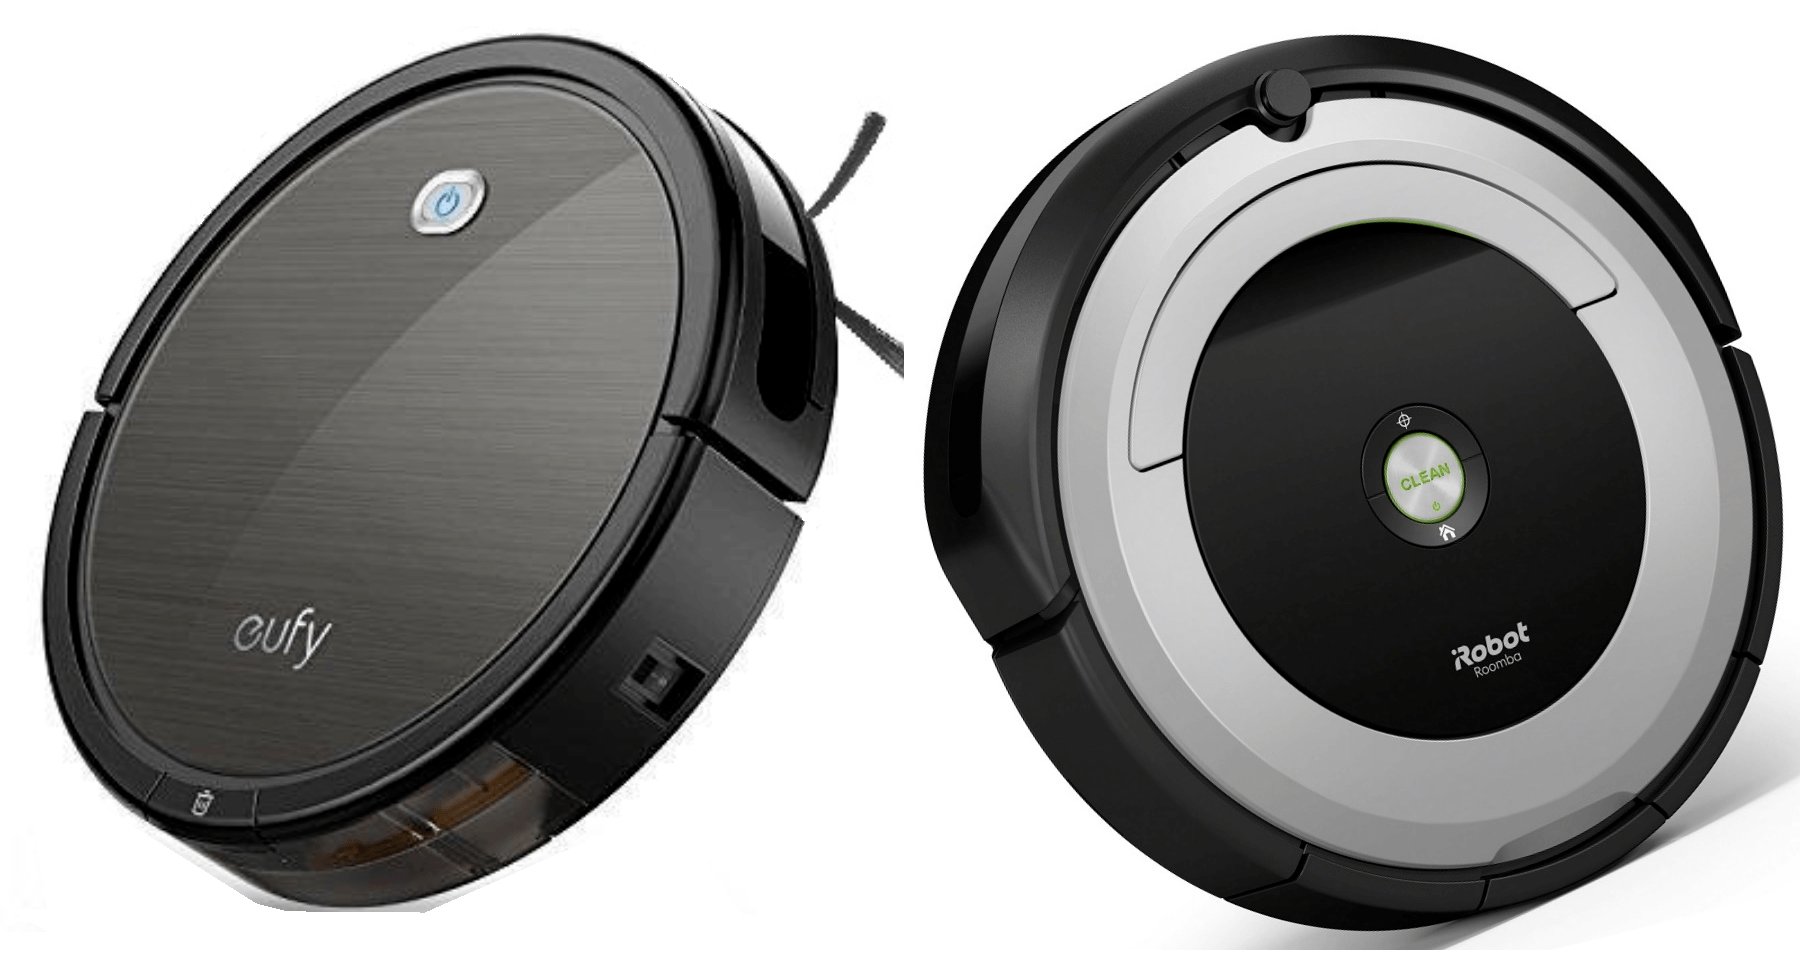 Eufy vs Roomba - Is the RoboVac 11+ Too 